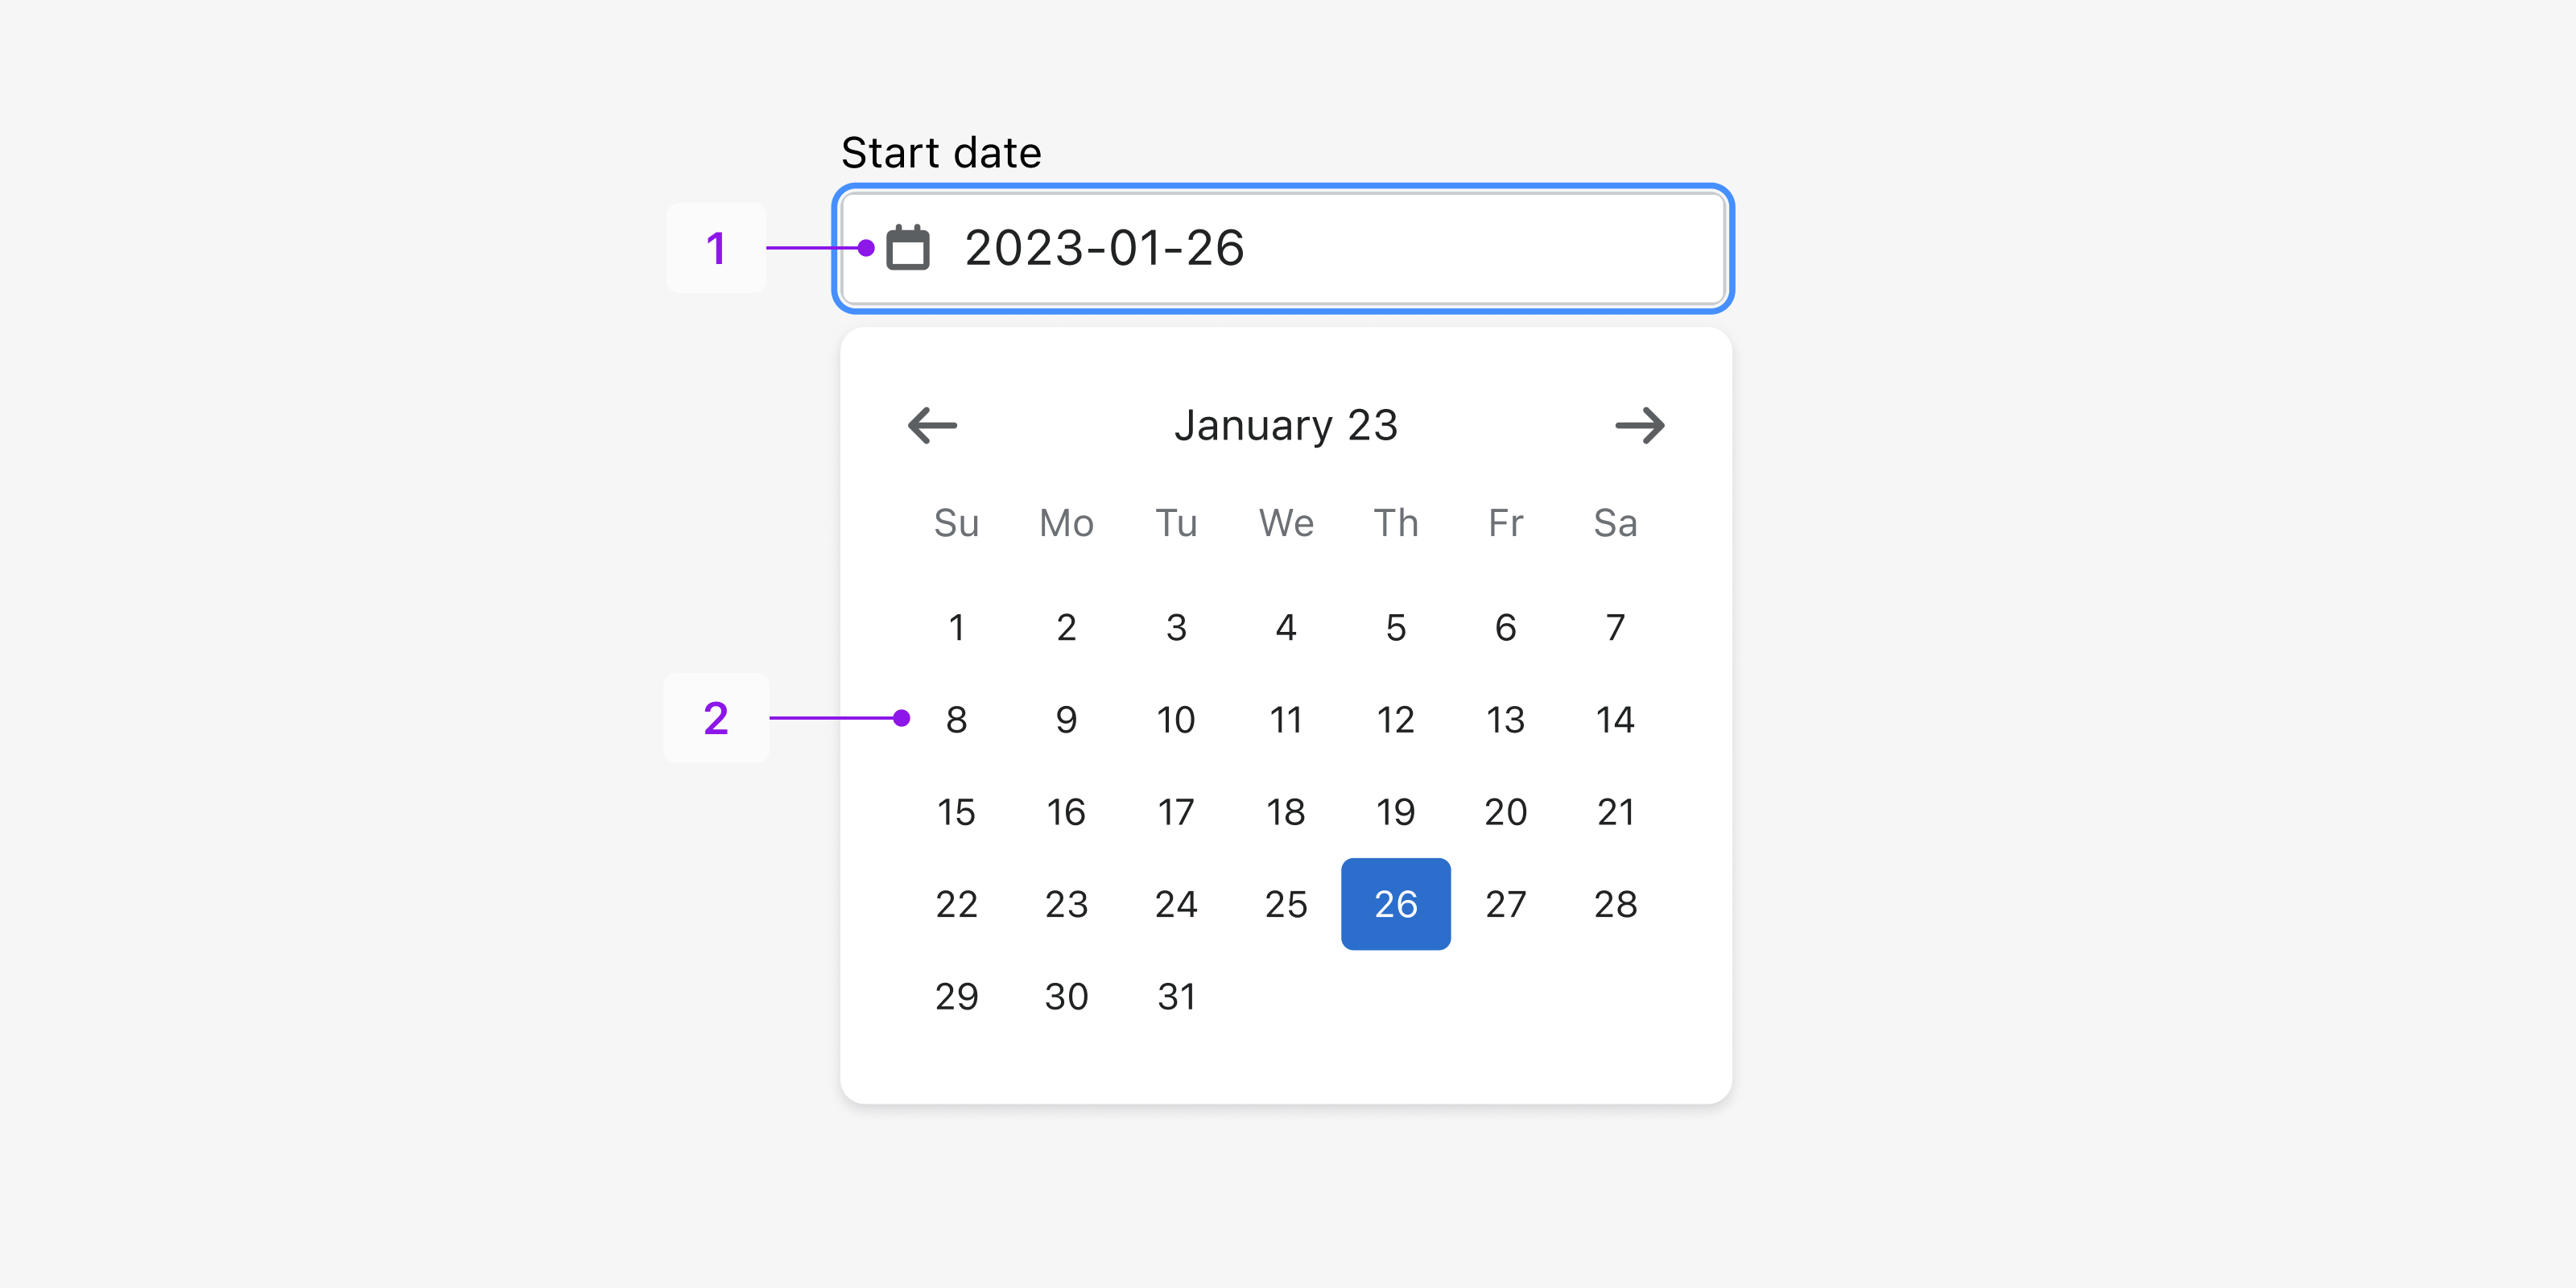 Date text input and a single-month calendar